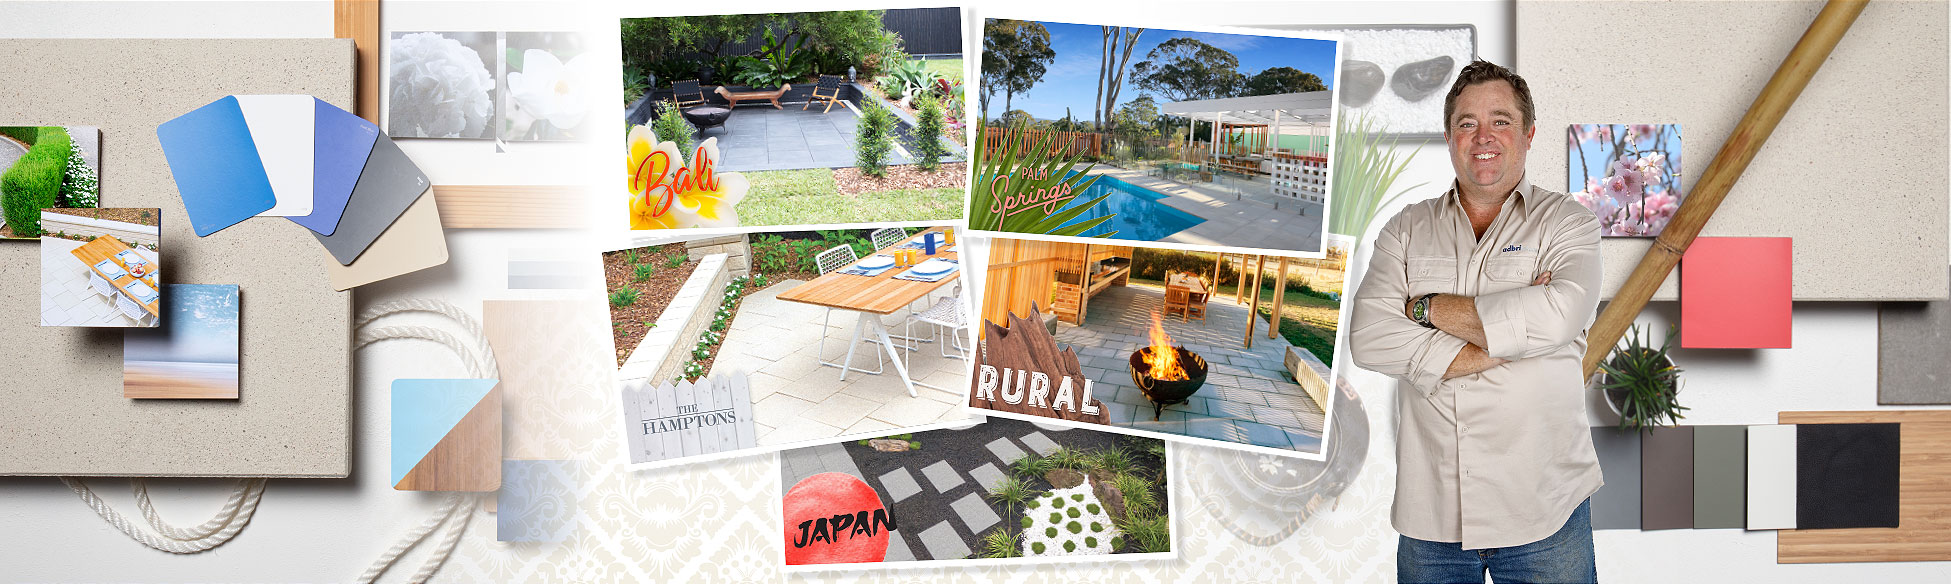 holiday at home destinations-inspired backyard garden ideas